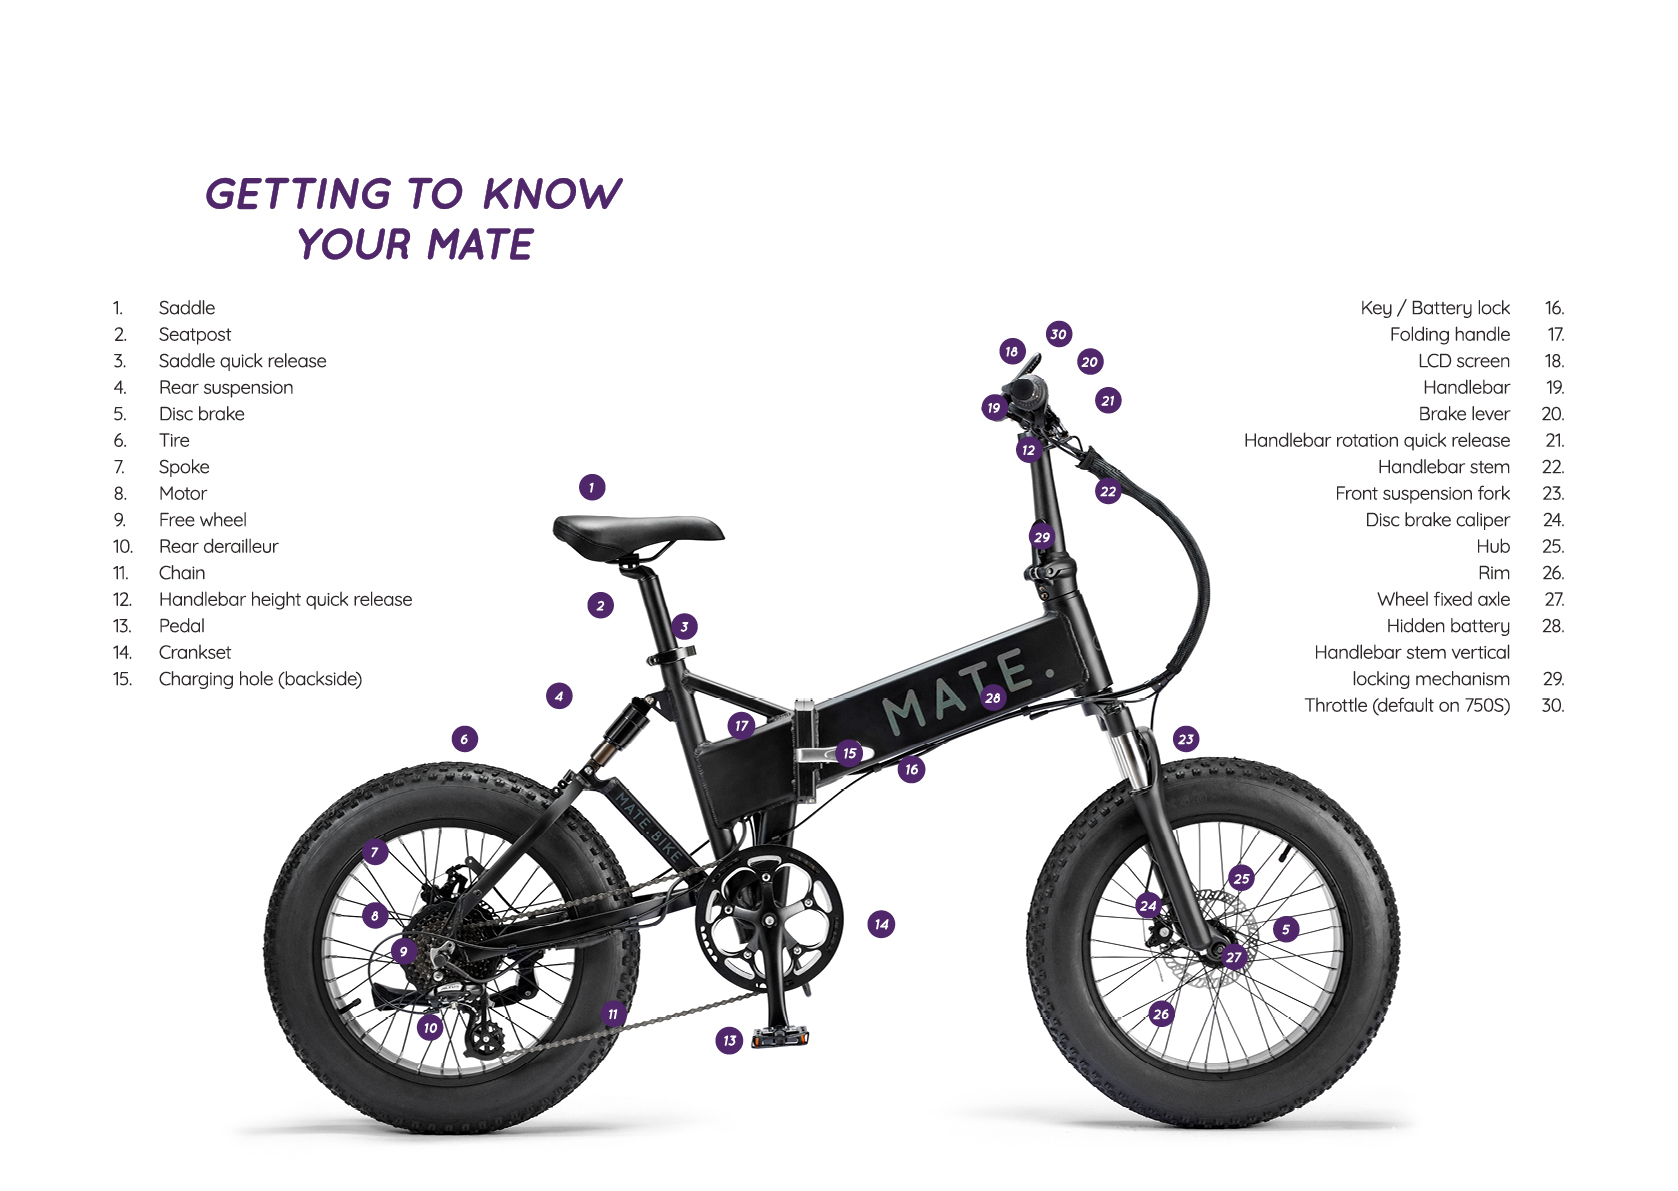 mate x folding bike